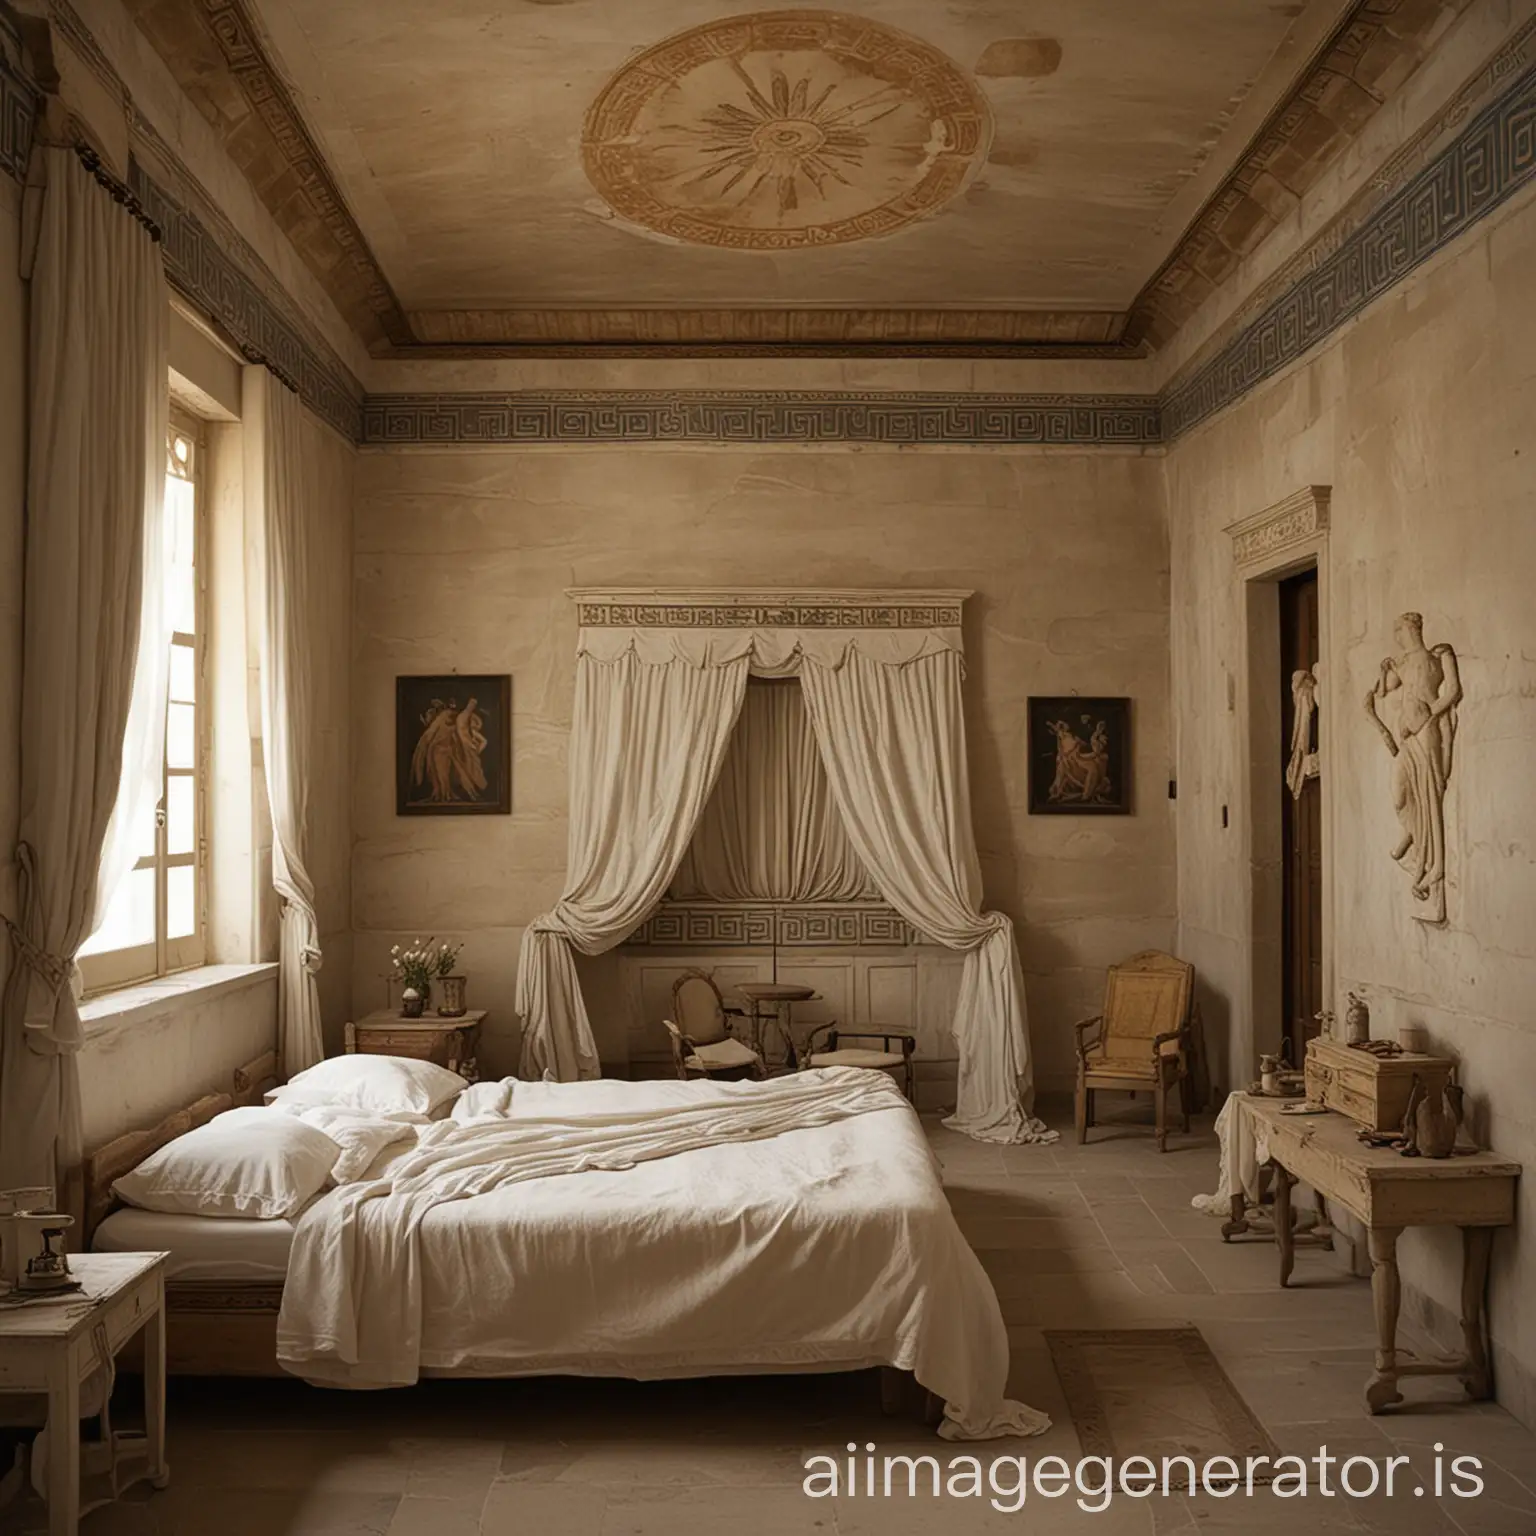 The sleeping room of the Greek goddess Gea

